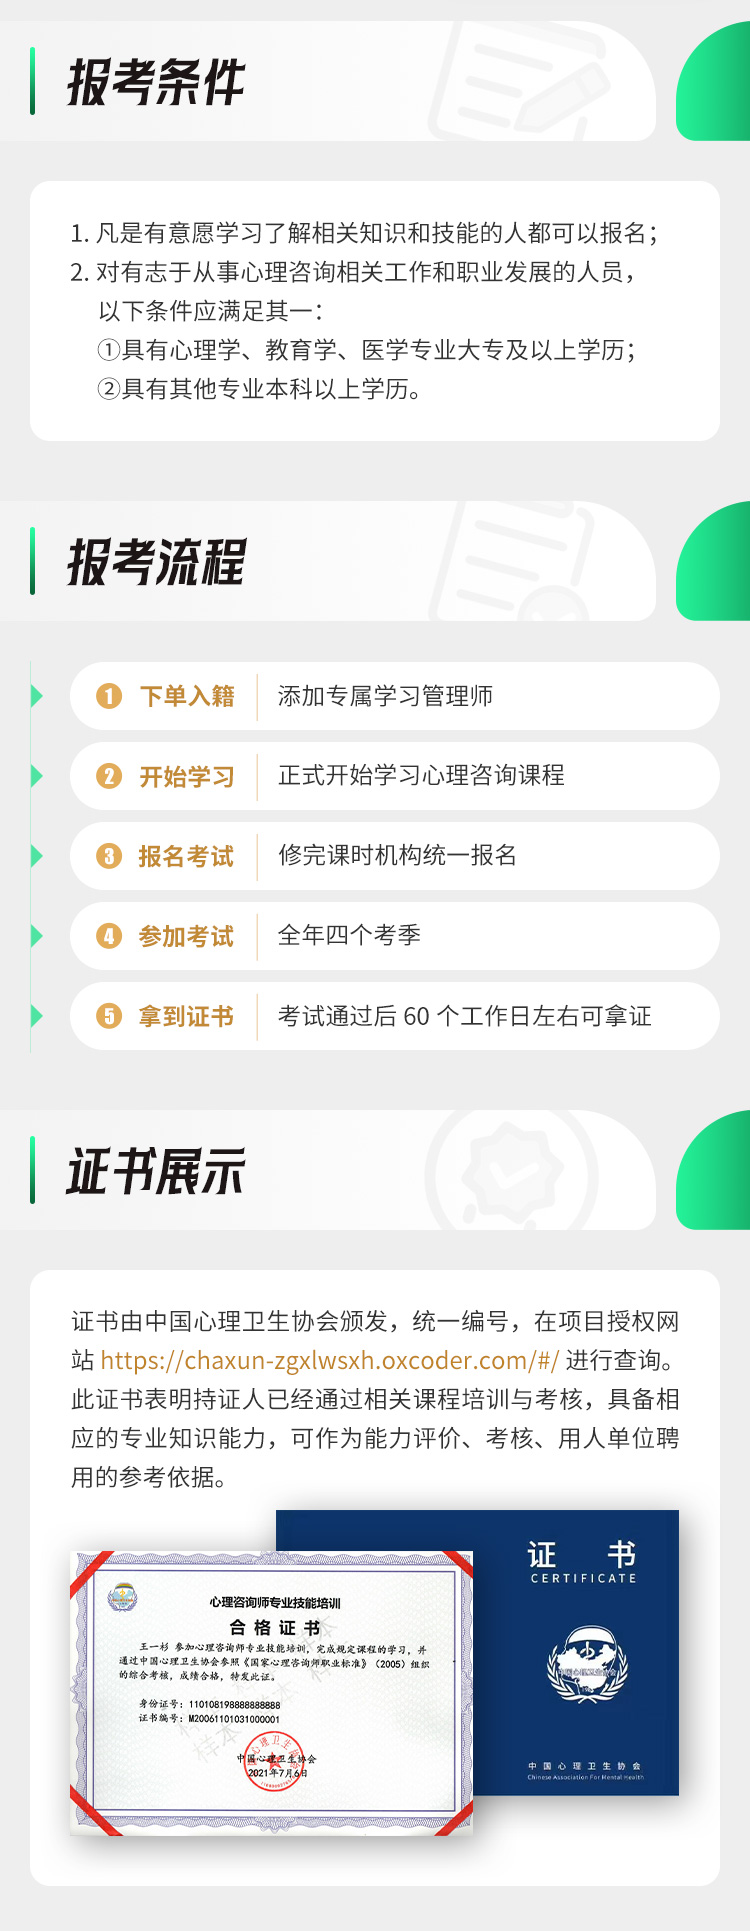 https://simg01.gaodunwangxiao.com/uploadfiles/product-center/202404/12/5f2f9_20240412164527.jpg